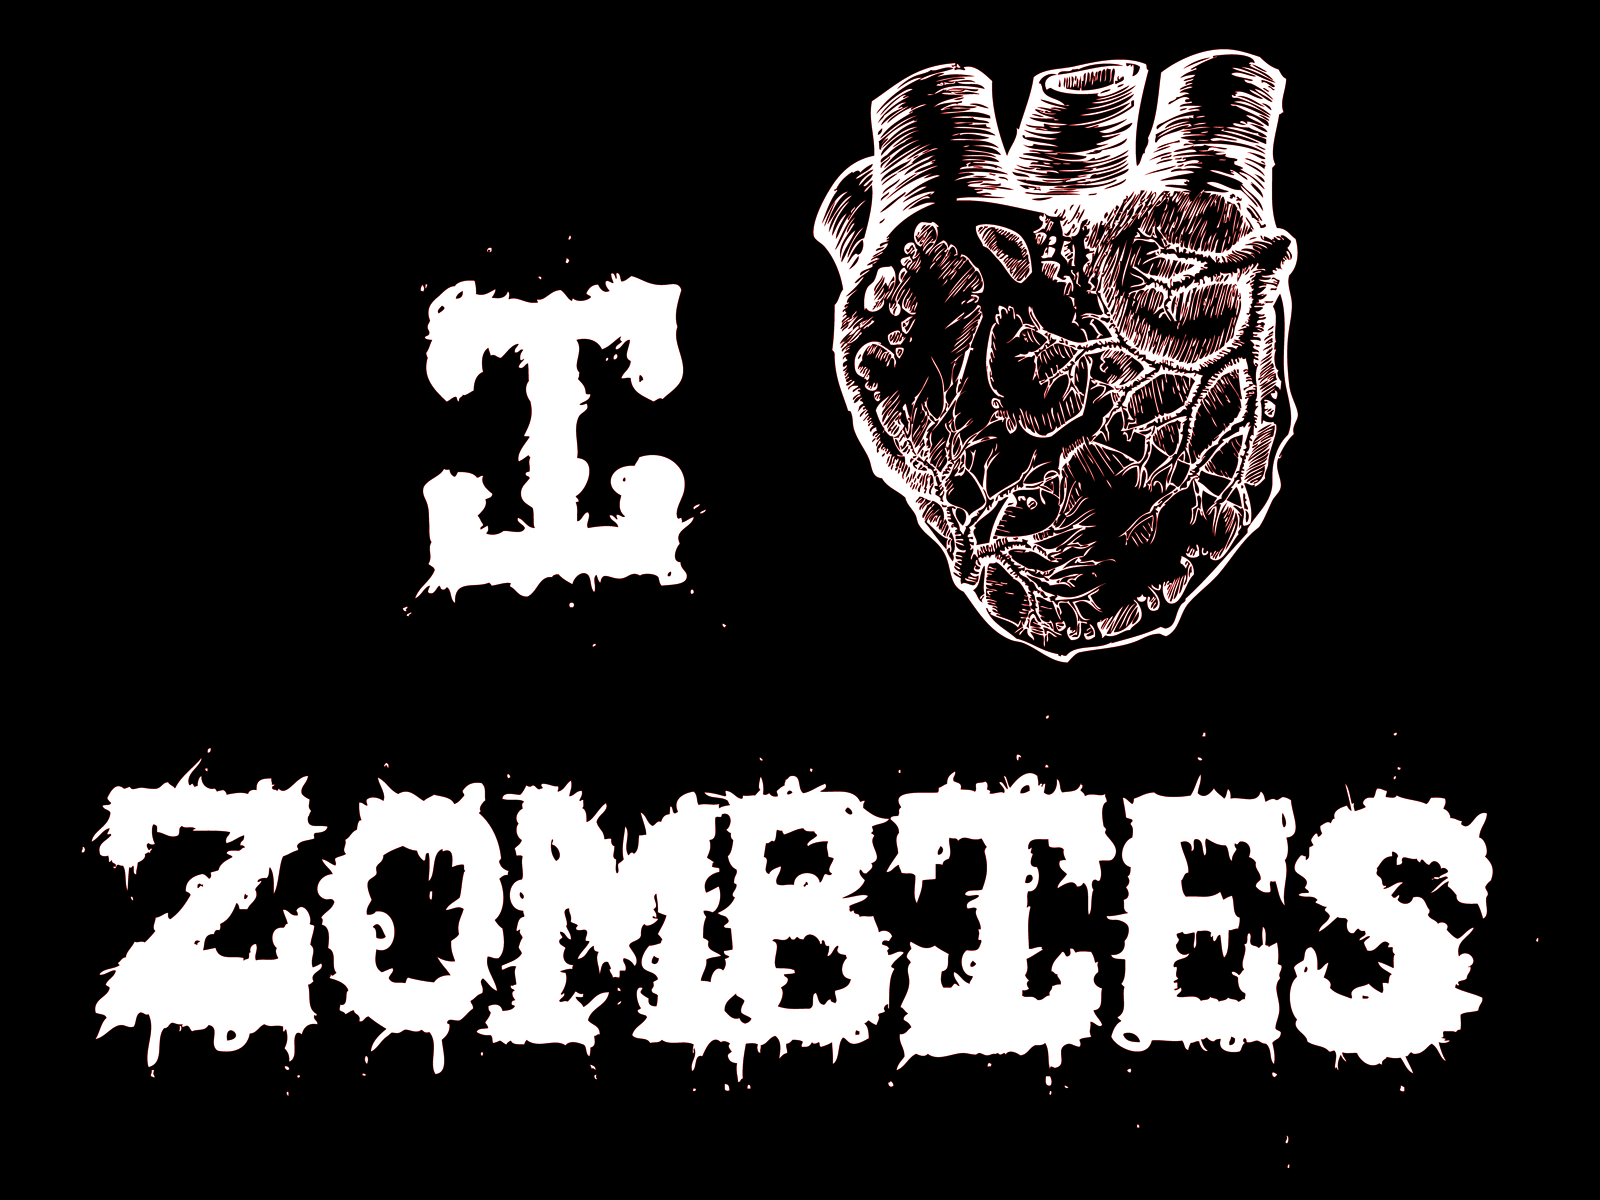 https://blogger.googleusercontent.com/img/b/R29vZ2xl/AVvXsEhC-Ck8mCUyyTgrwSpnfLfdEeg6taXG24omVXHqAEZpD09yxHiiQd39ziNTtCetSJFNwMAIt2VOMFRK6E1MtX8e6IWRlDj3hv41FhoVPxnXhEnD1O6fsqivrpa8i4gUVgdl95uUsy_z9Q5_/s1600/horror-pictures-zombie-3.png